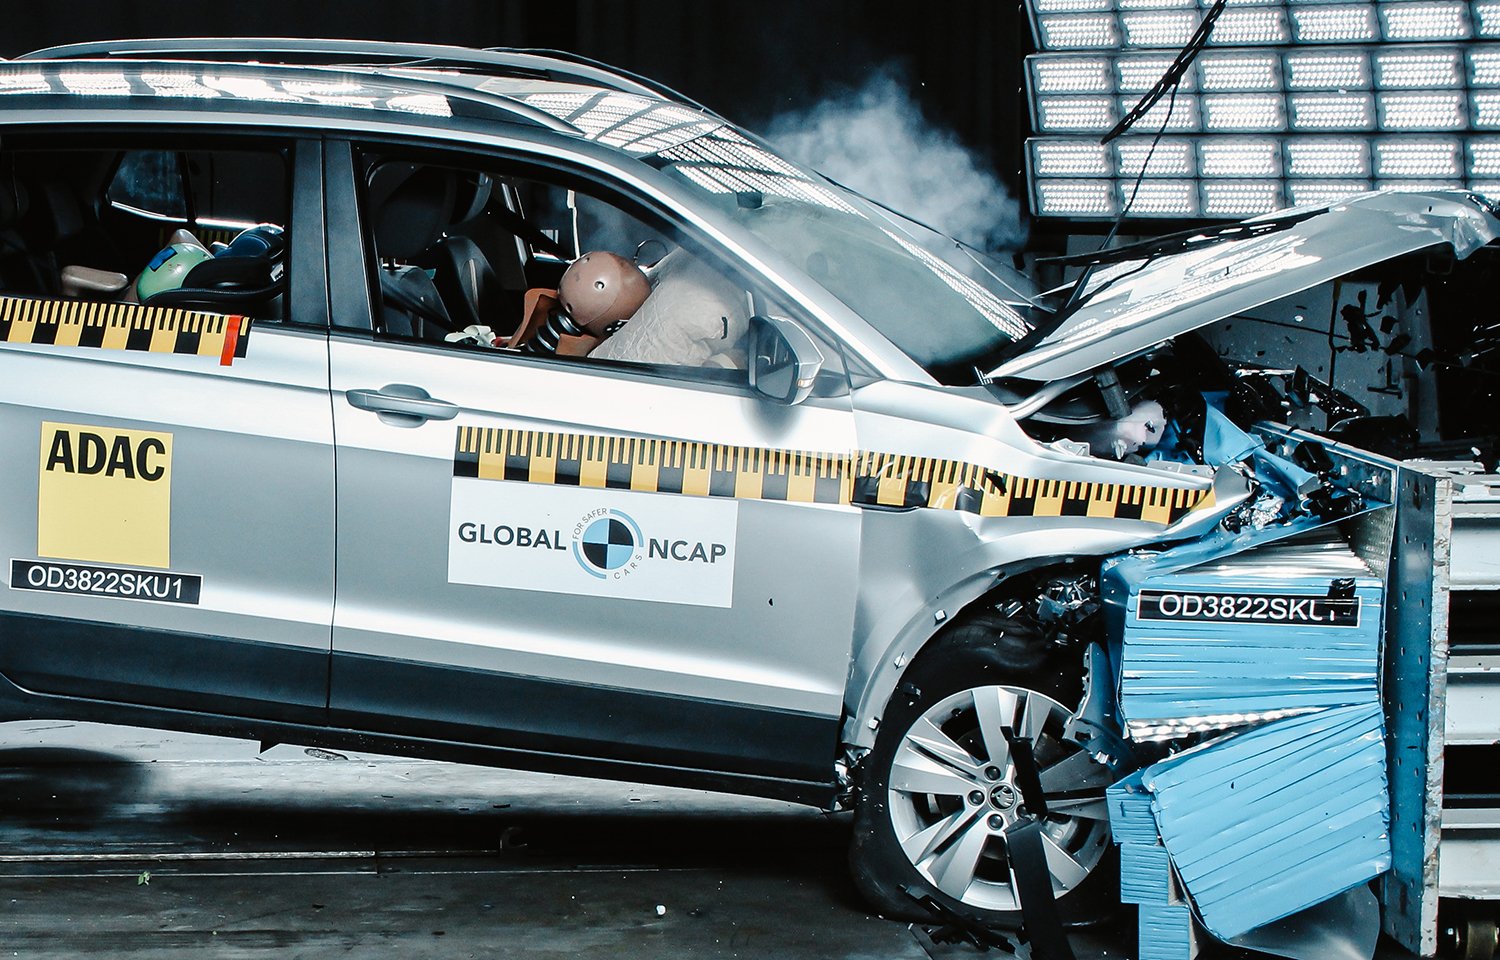 Volkswagen Virtus, Skoda Slavia achieve 5-star safety rating in Global NCAP  [Video] - Car News